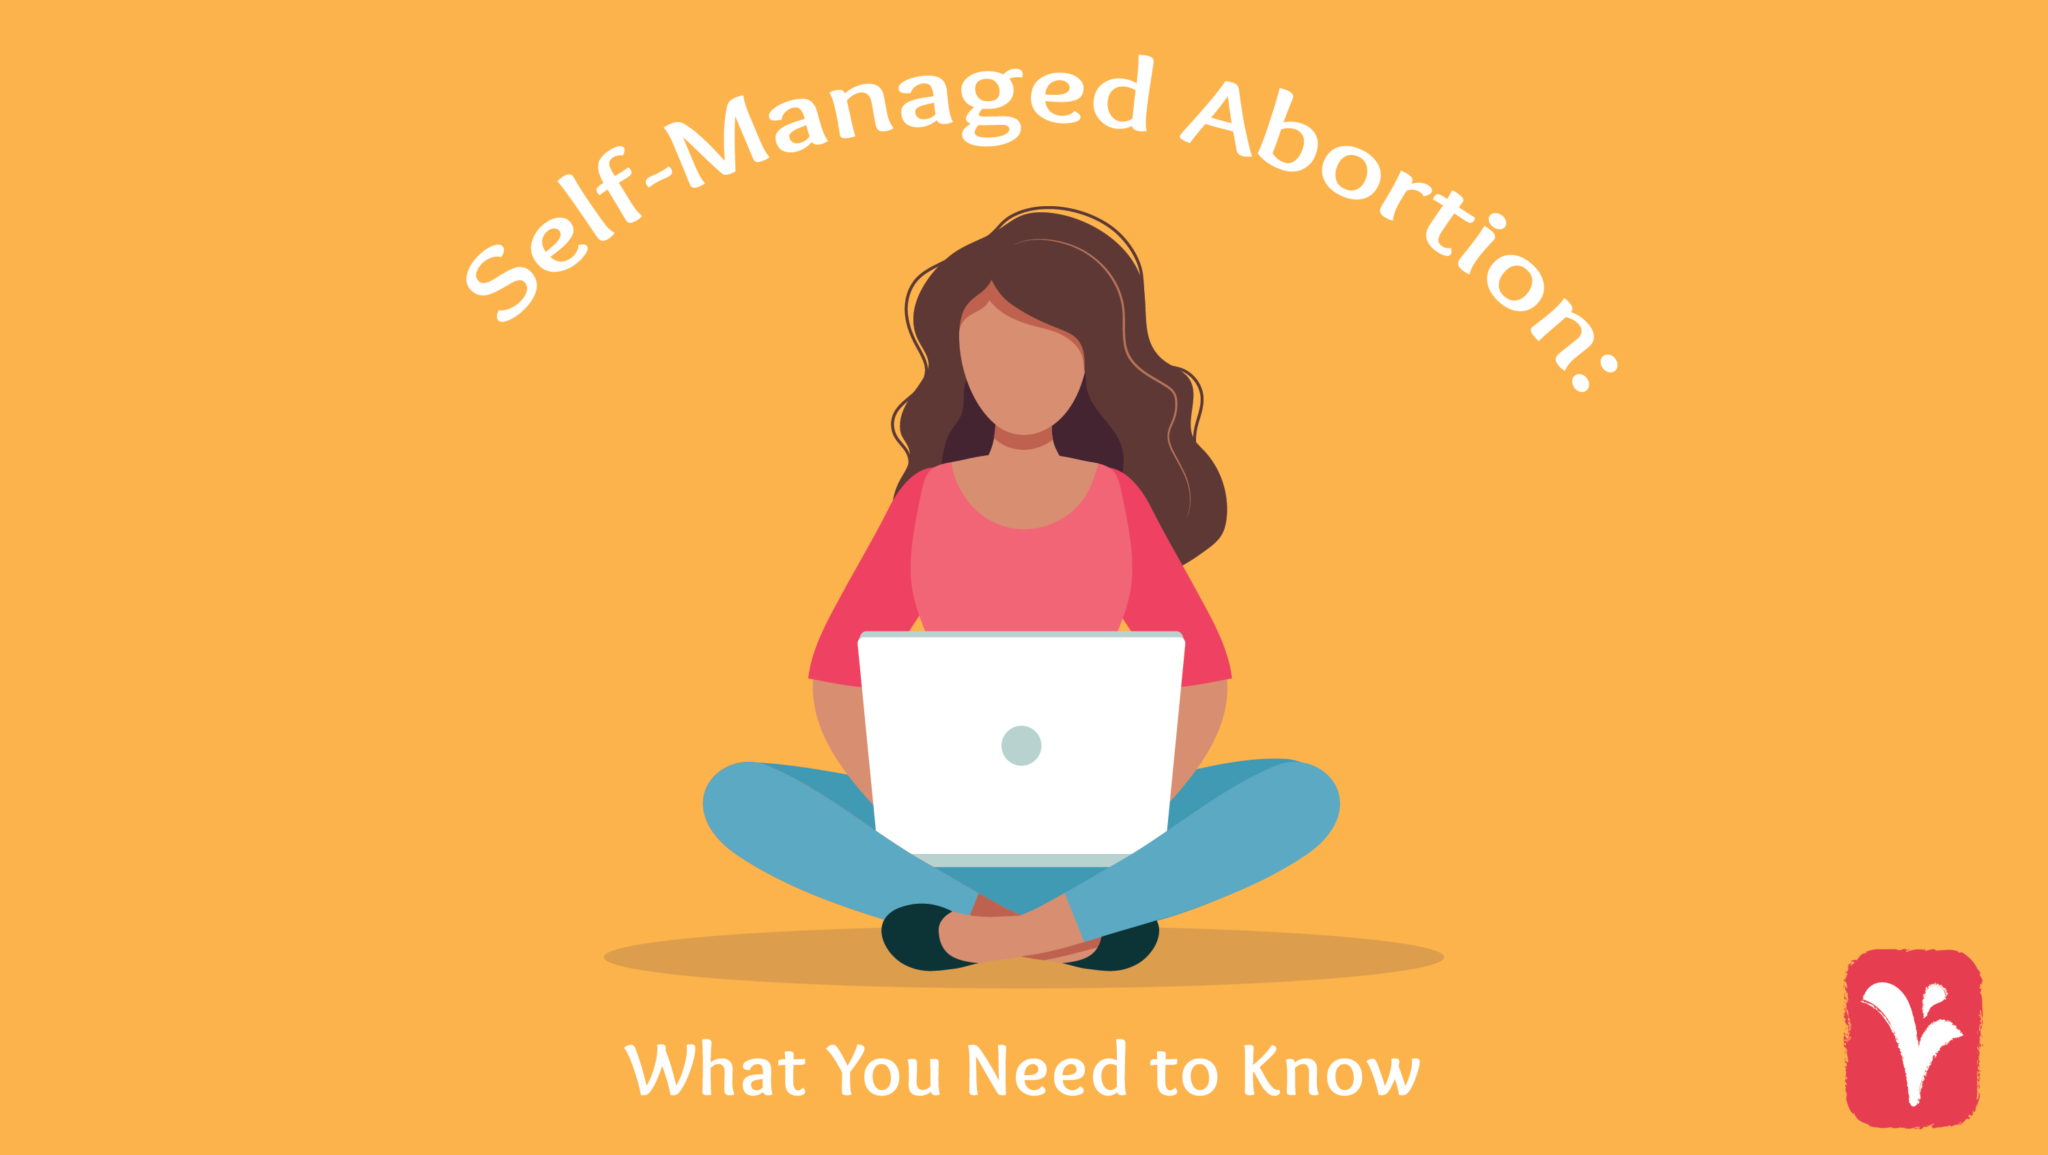 self managed abortion